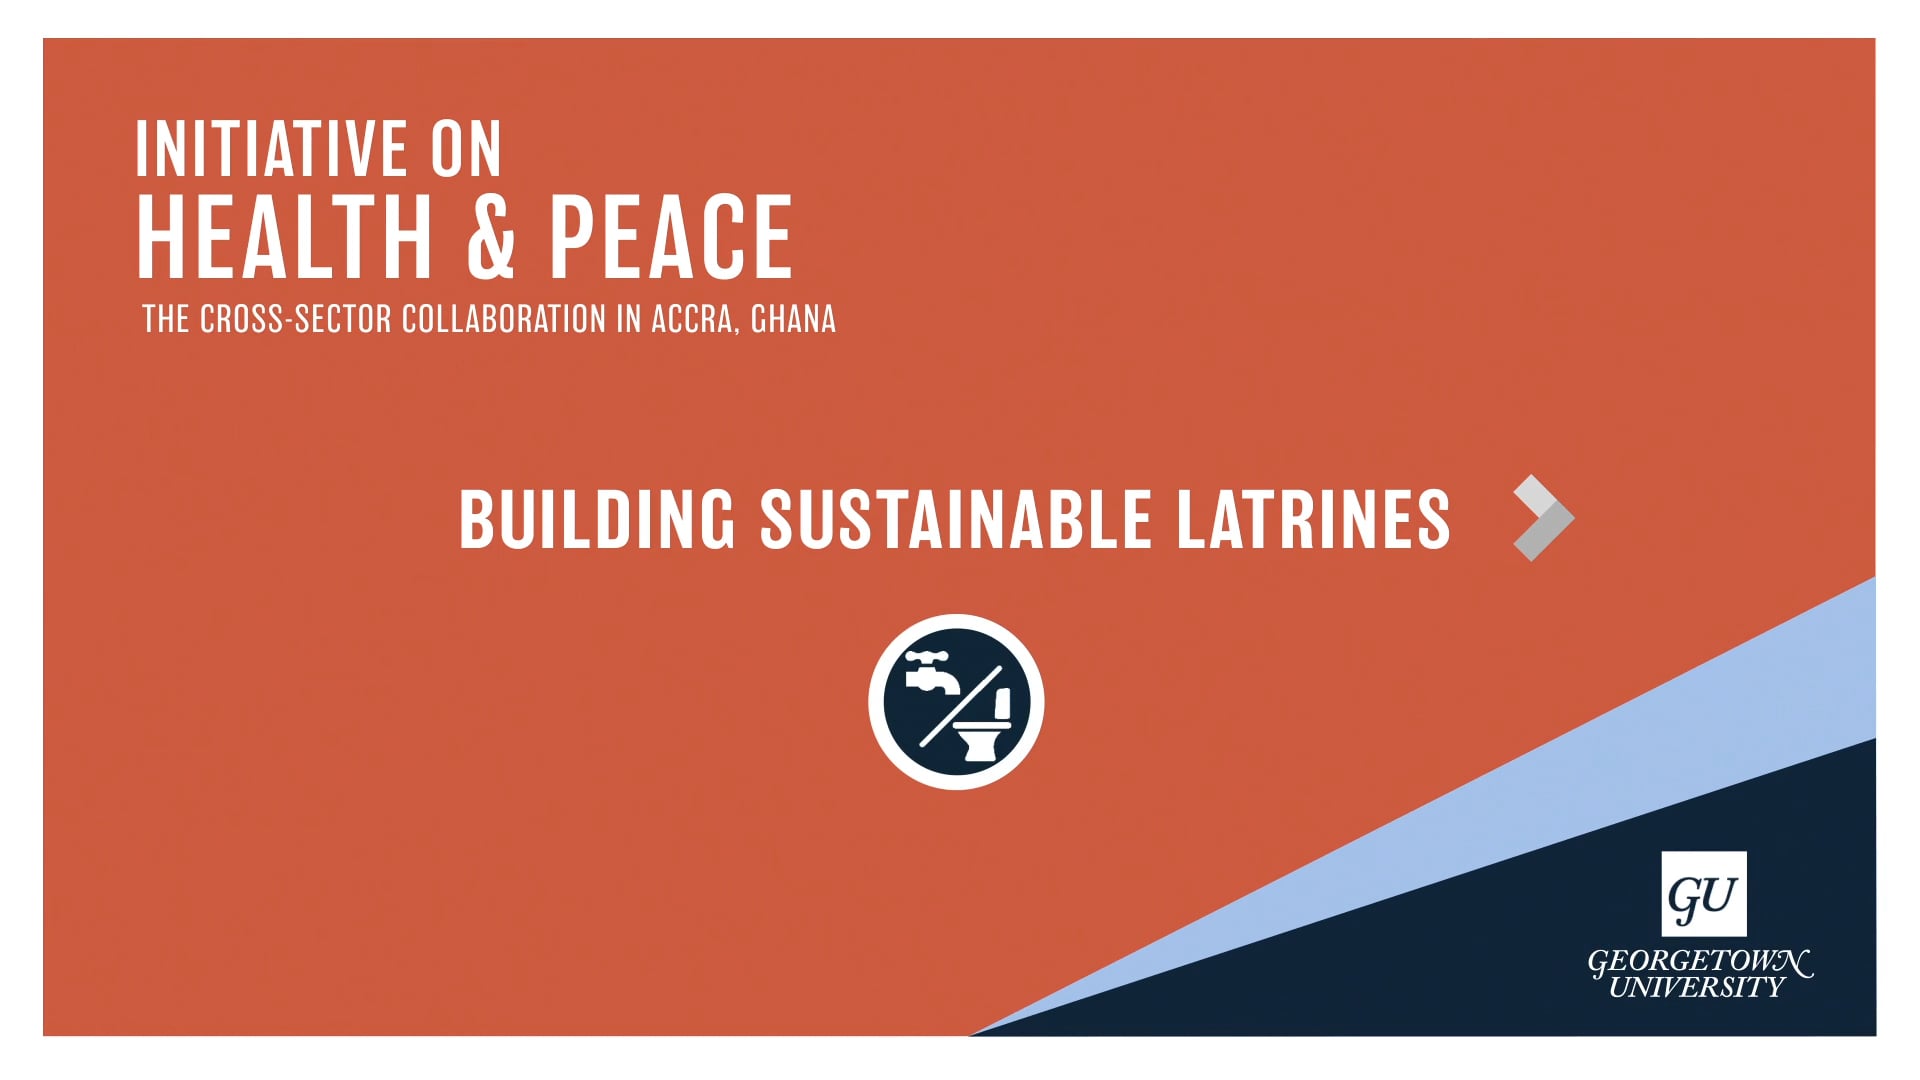 Georgetown University - Building Sustainable Latrines